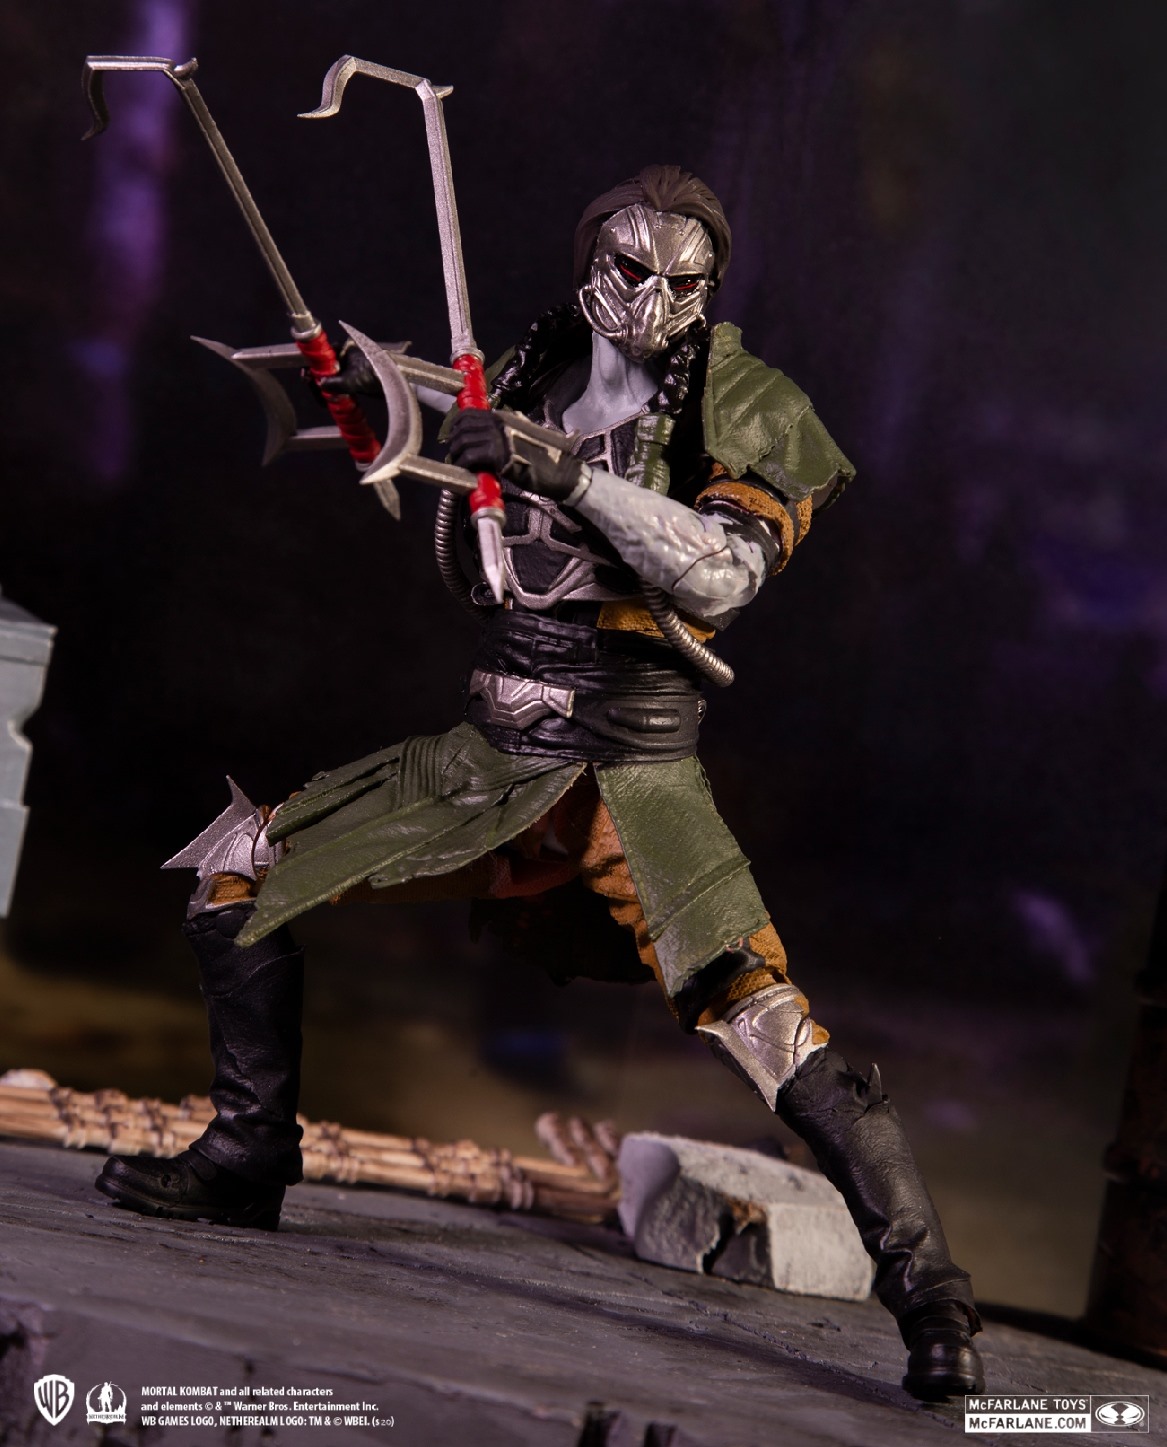 Baraka & Kitana Join McFarlane's Mortal Kombat Collection